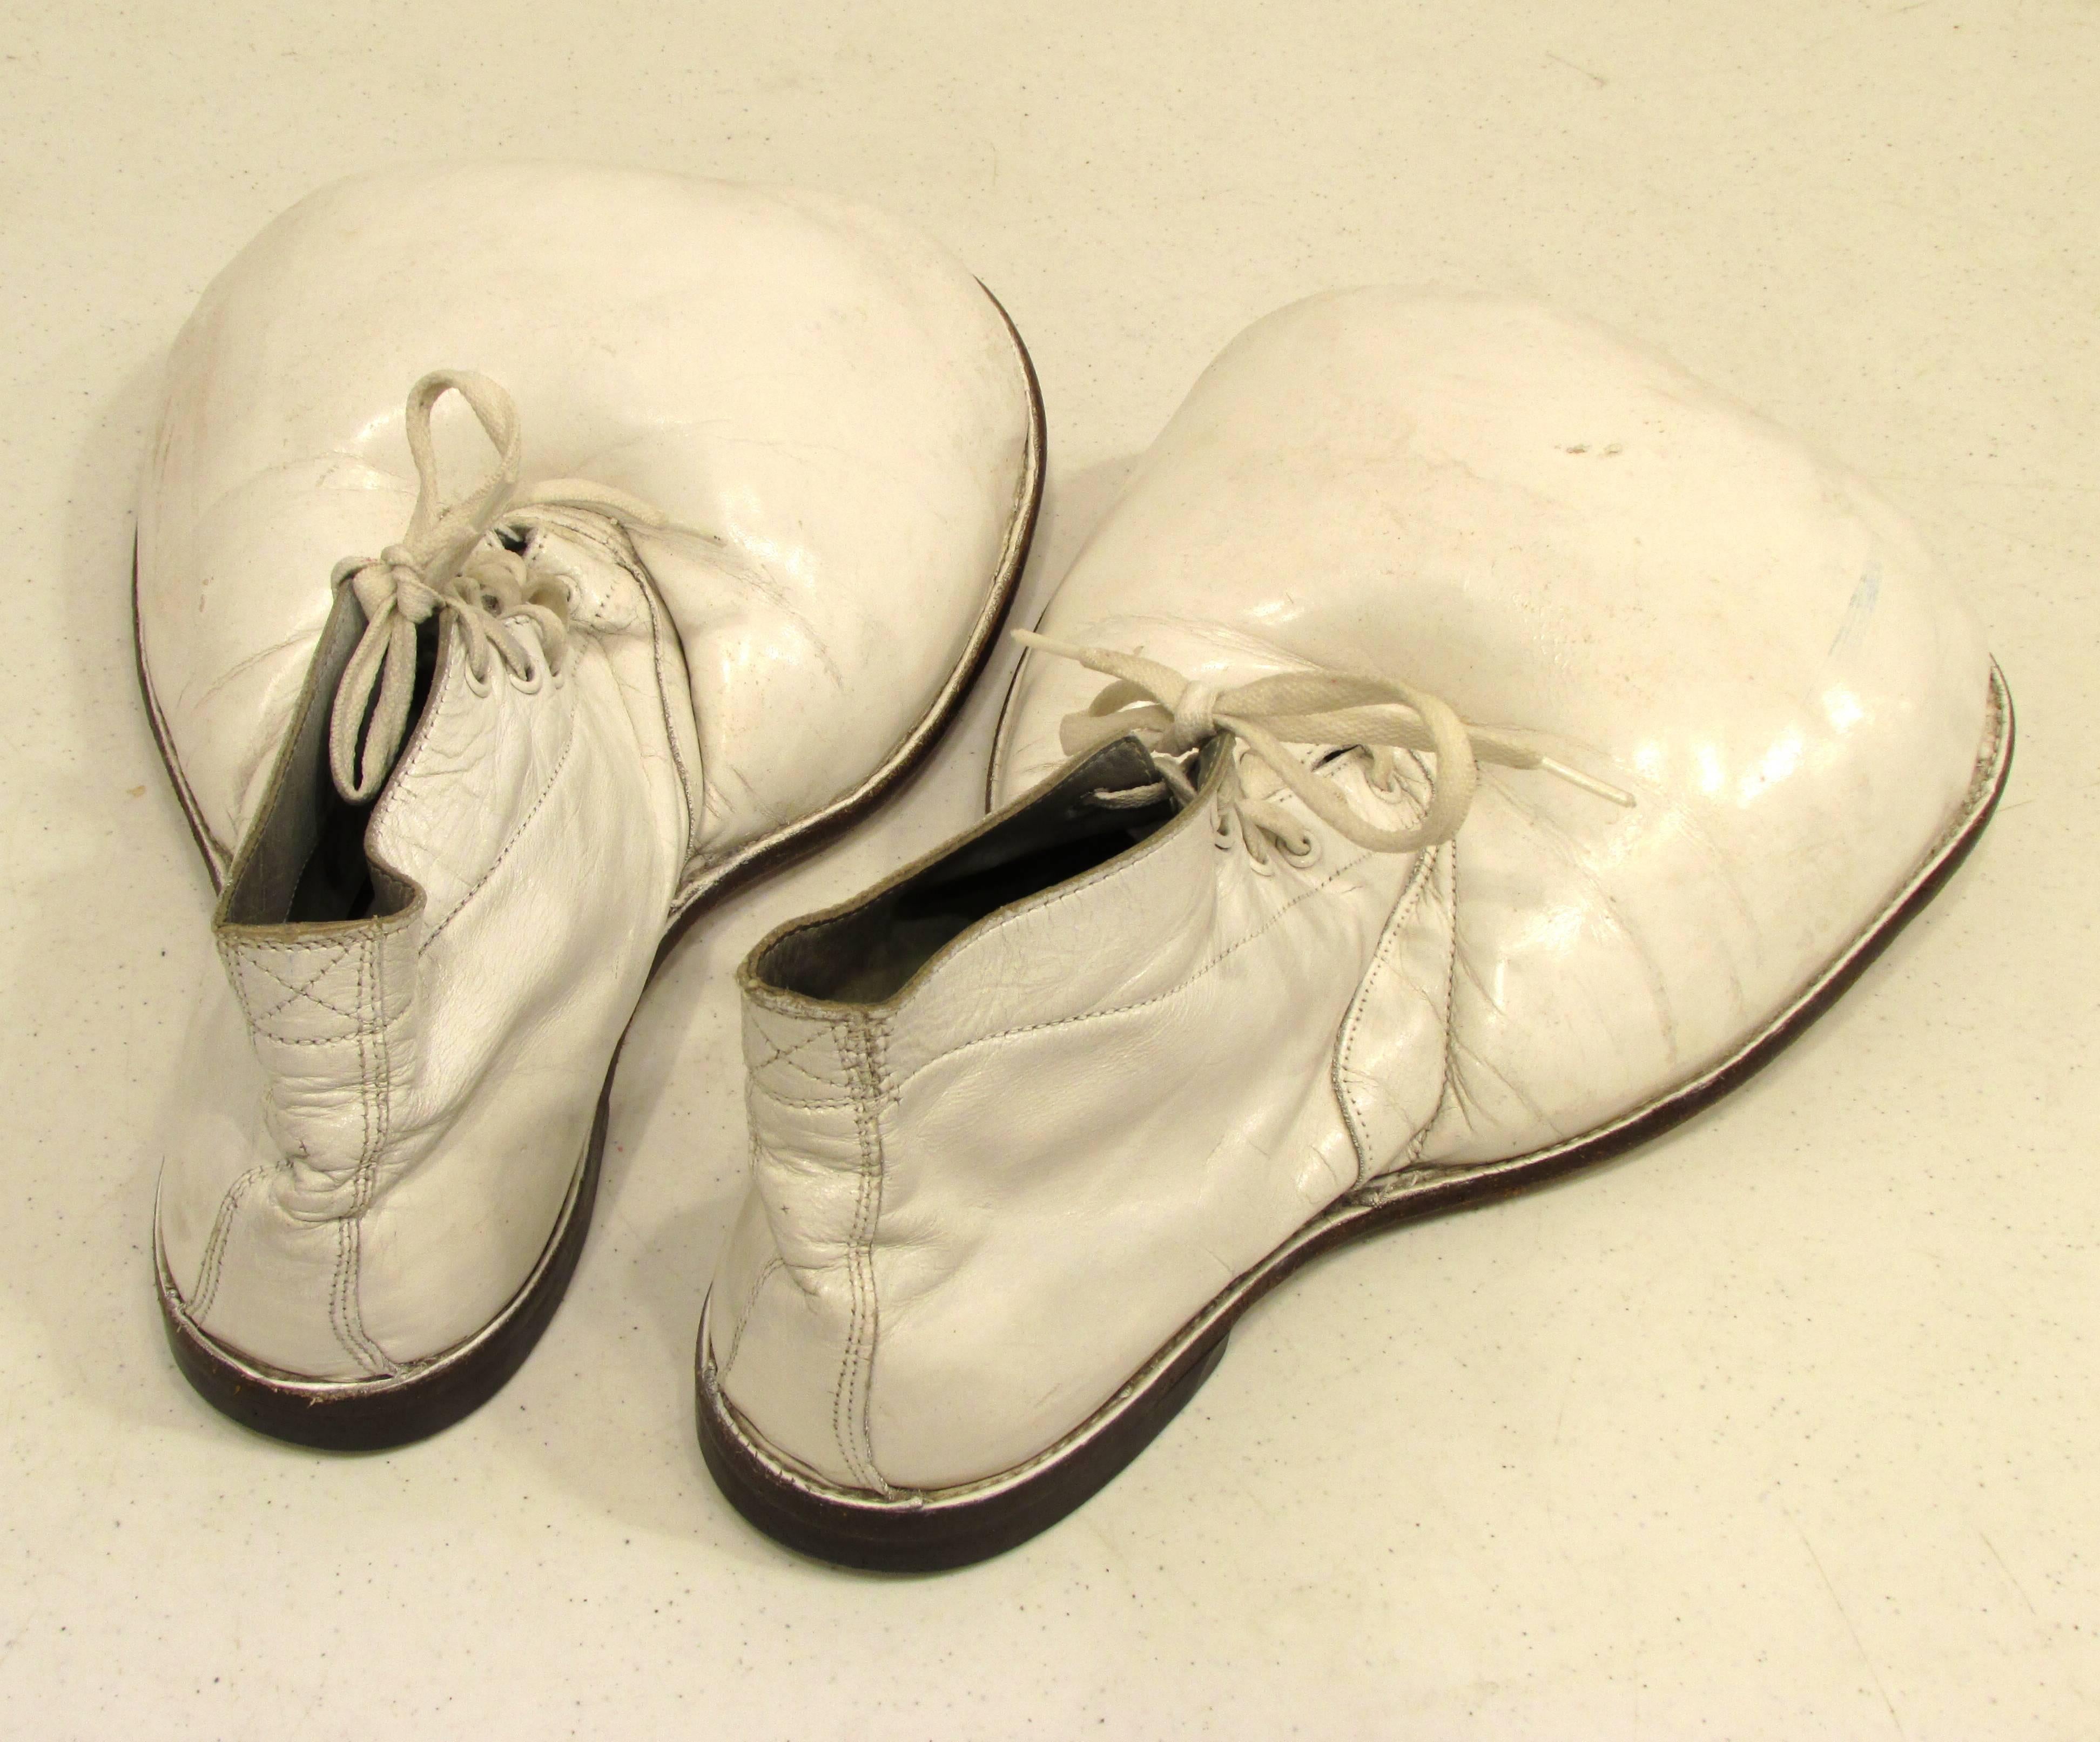 clown shoes white